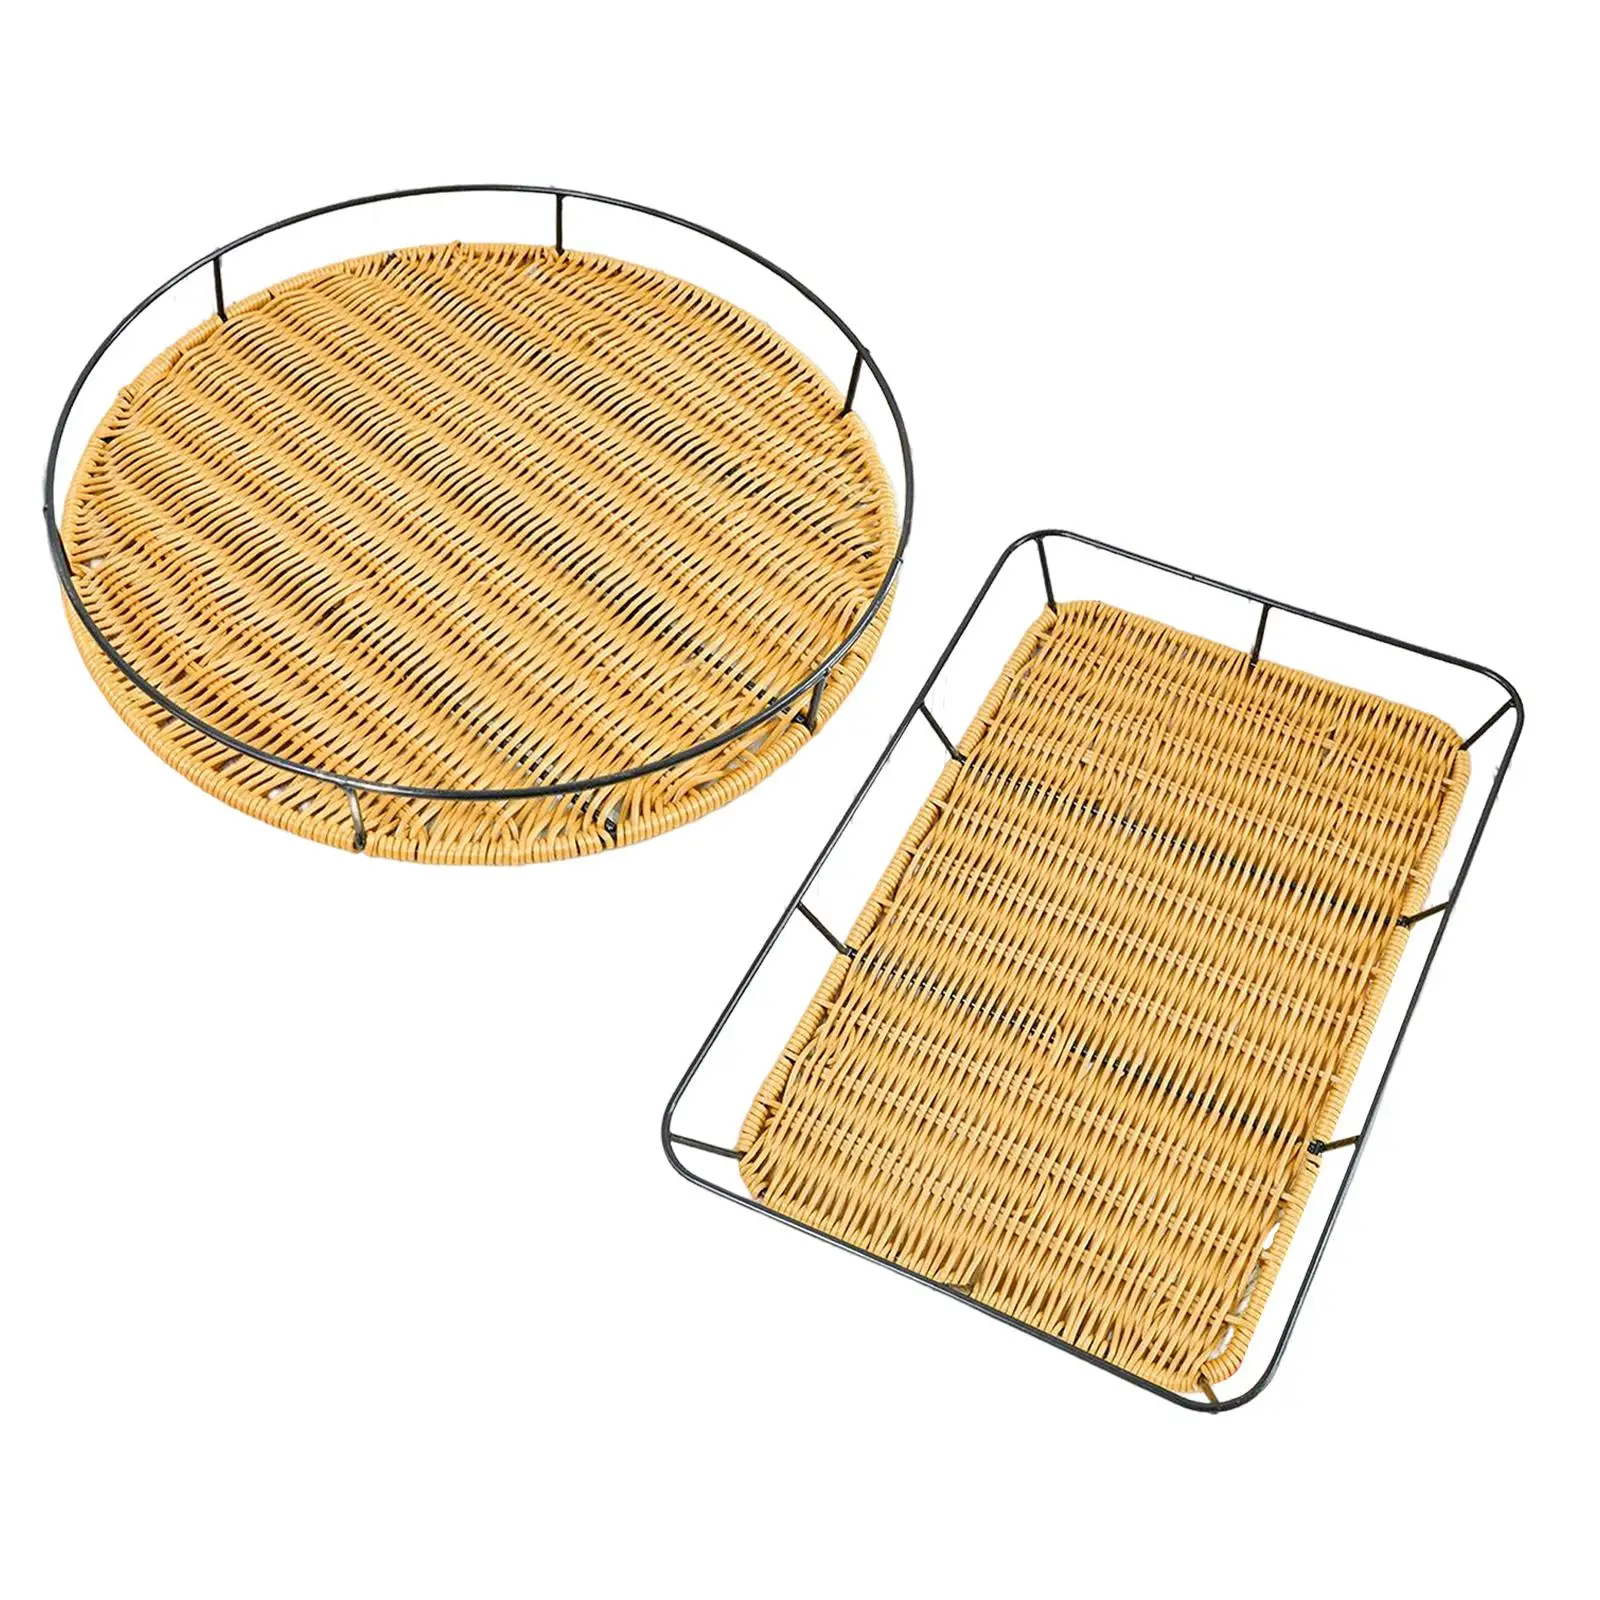 Food Serving Baskets Home Decorative Trays Handmade Rattan Bread Basket for Breakfast fruit Table Home Kitchen Bathroom